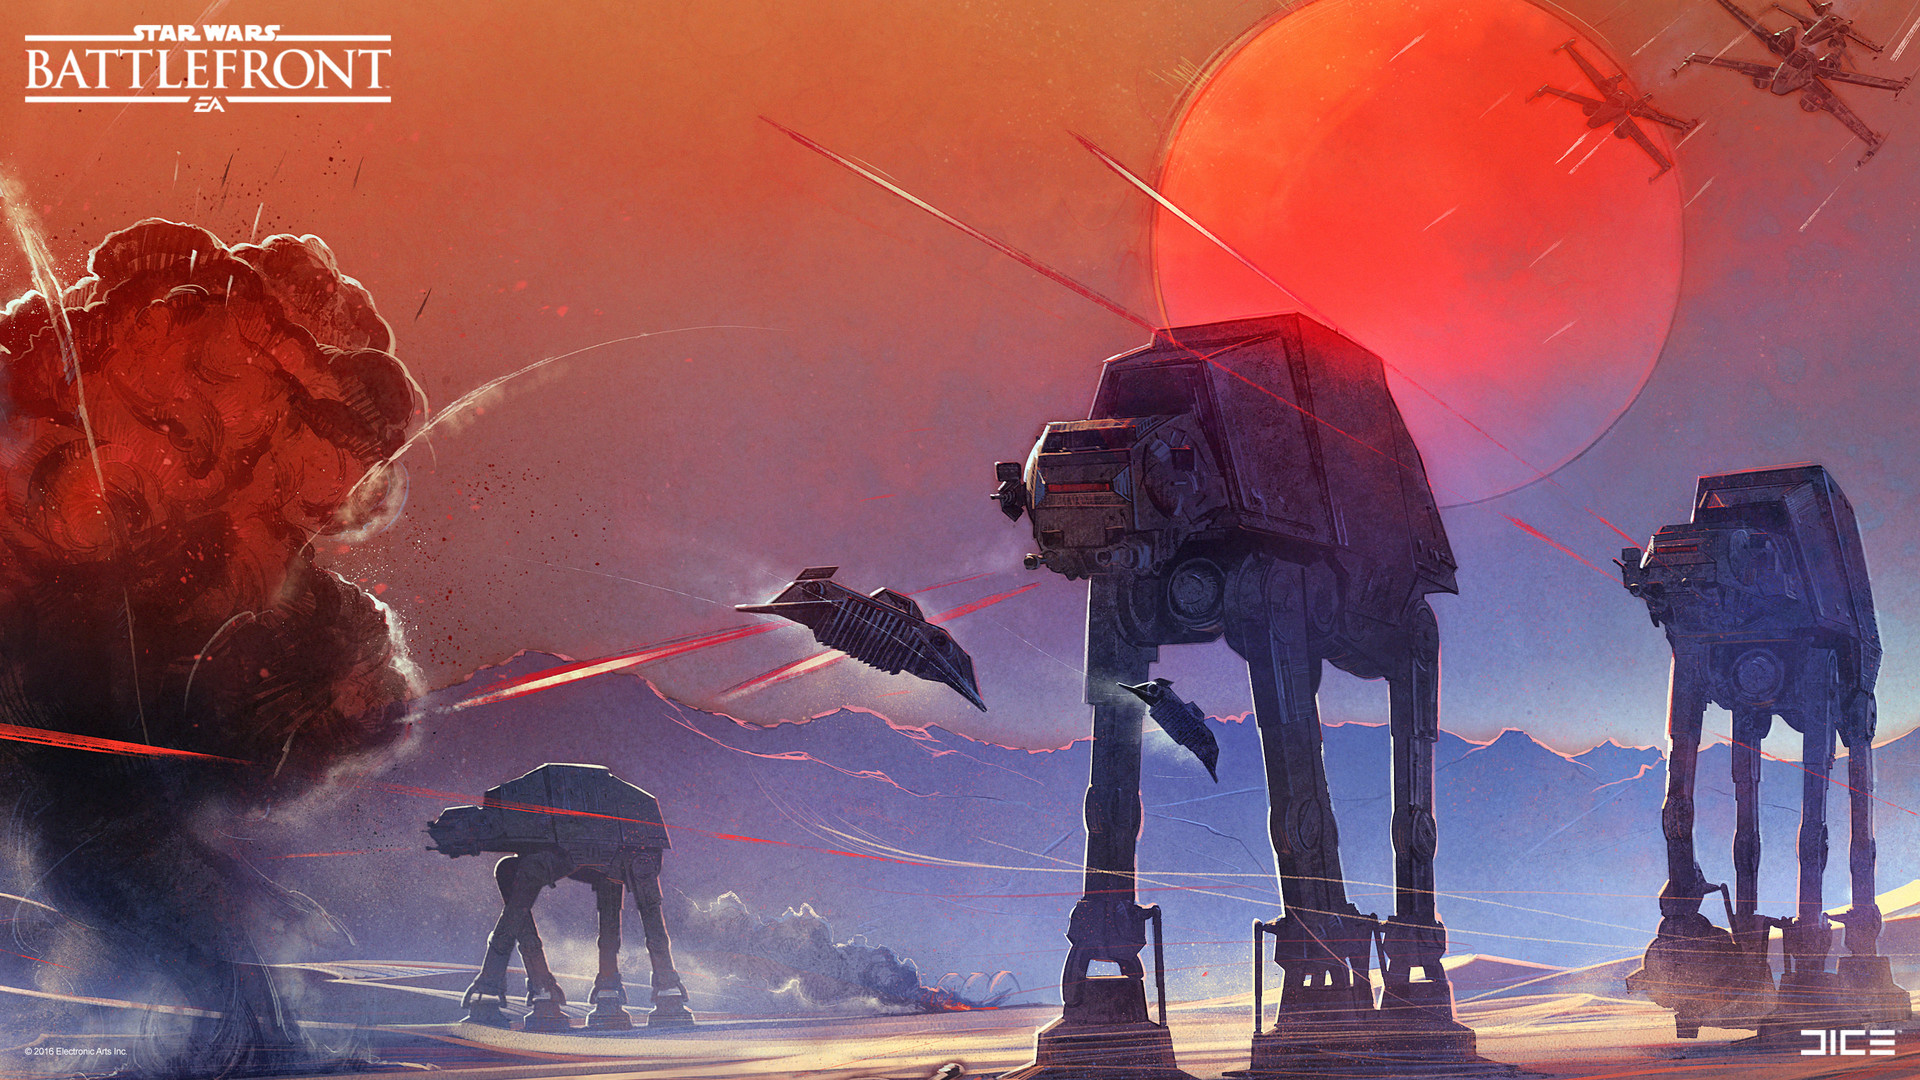 Video Game Star Wars Battlefront (2015) HD Wallpaper by Anton Grandert